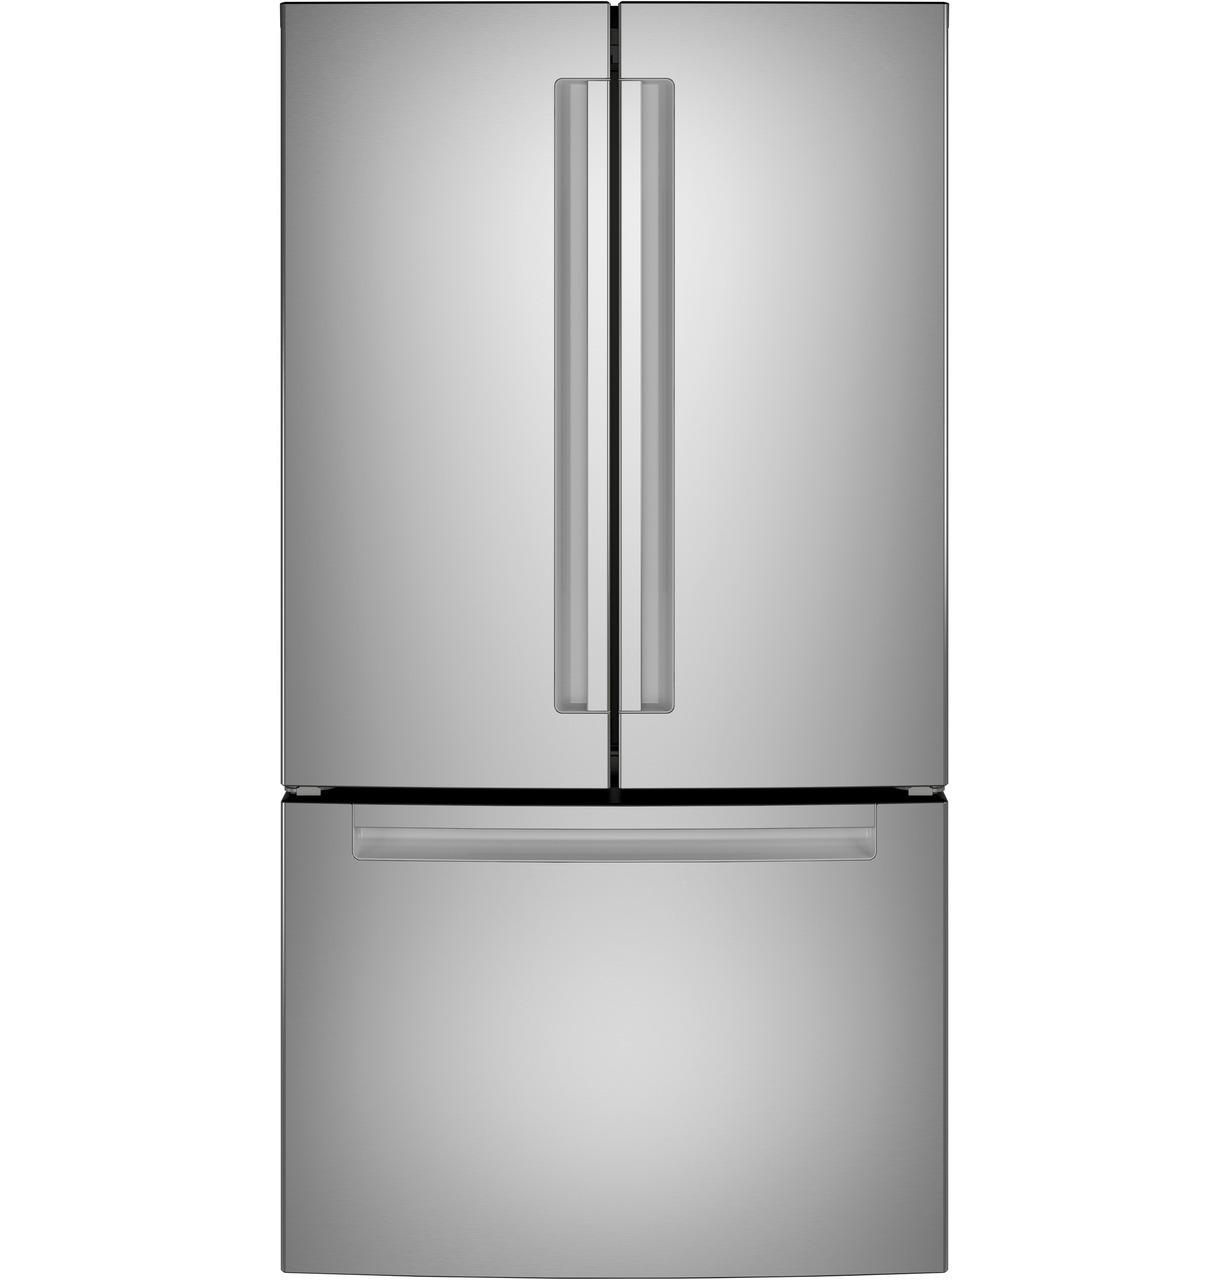 Haier ENERGY STAR® 27.0 Cu. Ft. Fingerprint Resistant French-Door Refrigerator